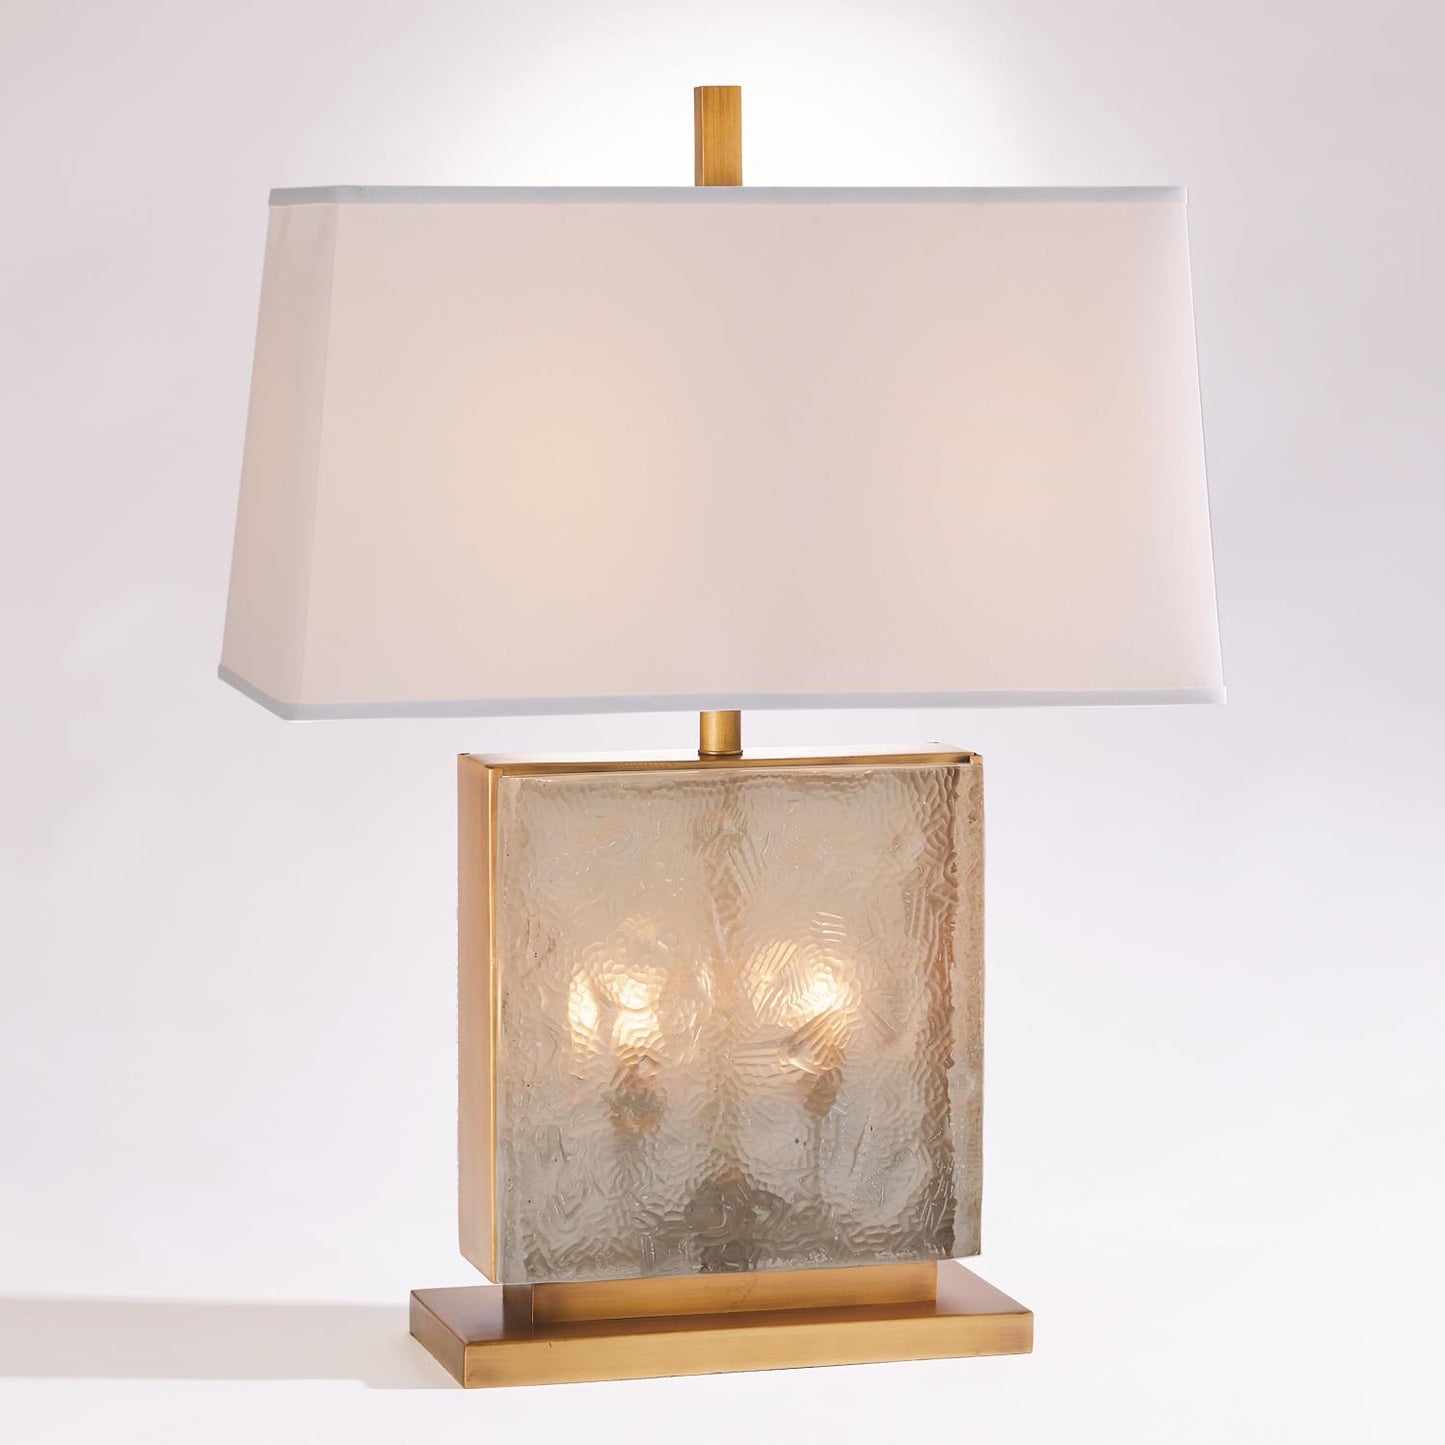 Cube Slab Table Lamp - Antique Brass - Grats Decor Interior Design & Build Inc.